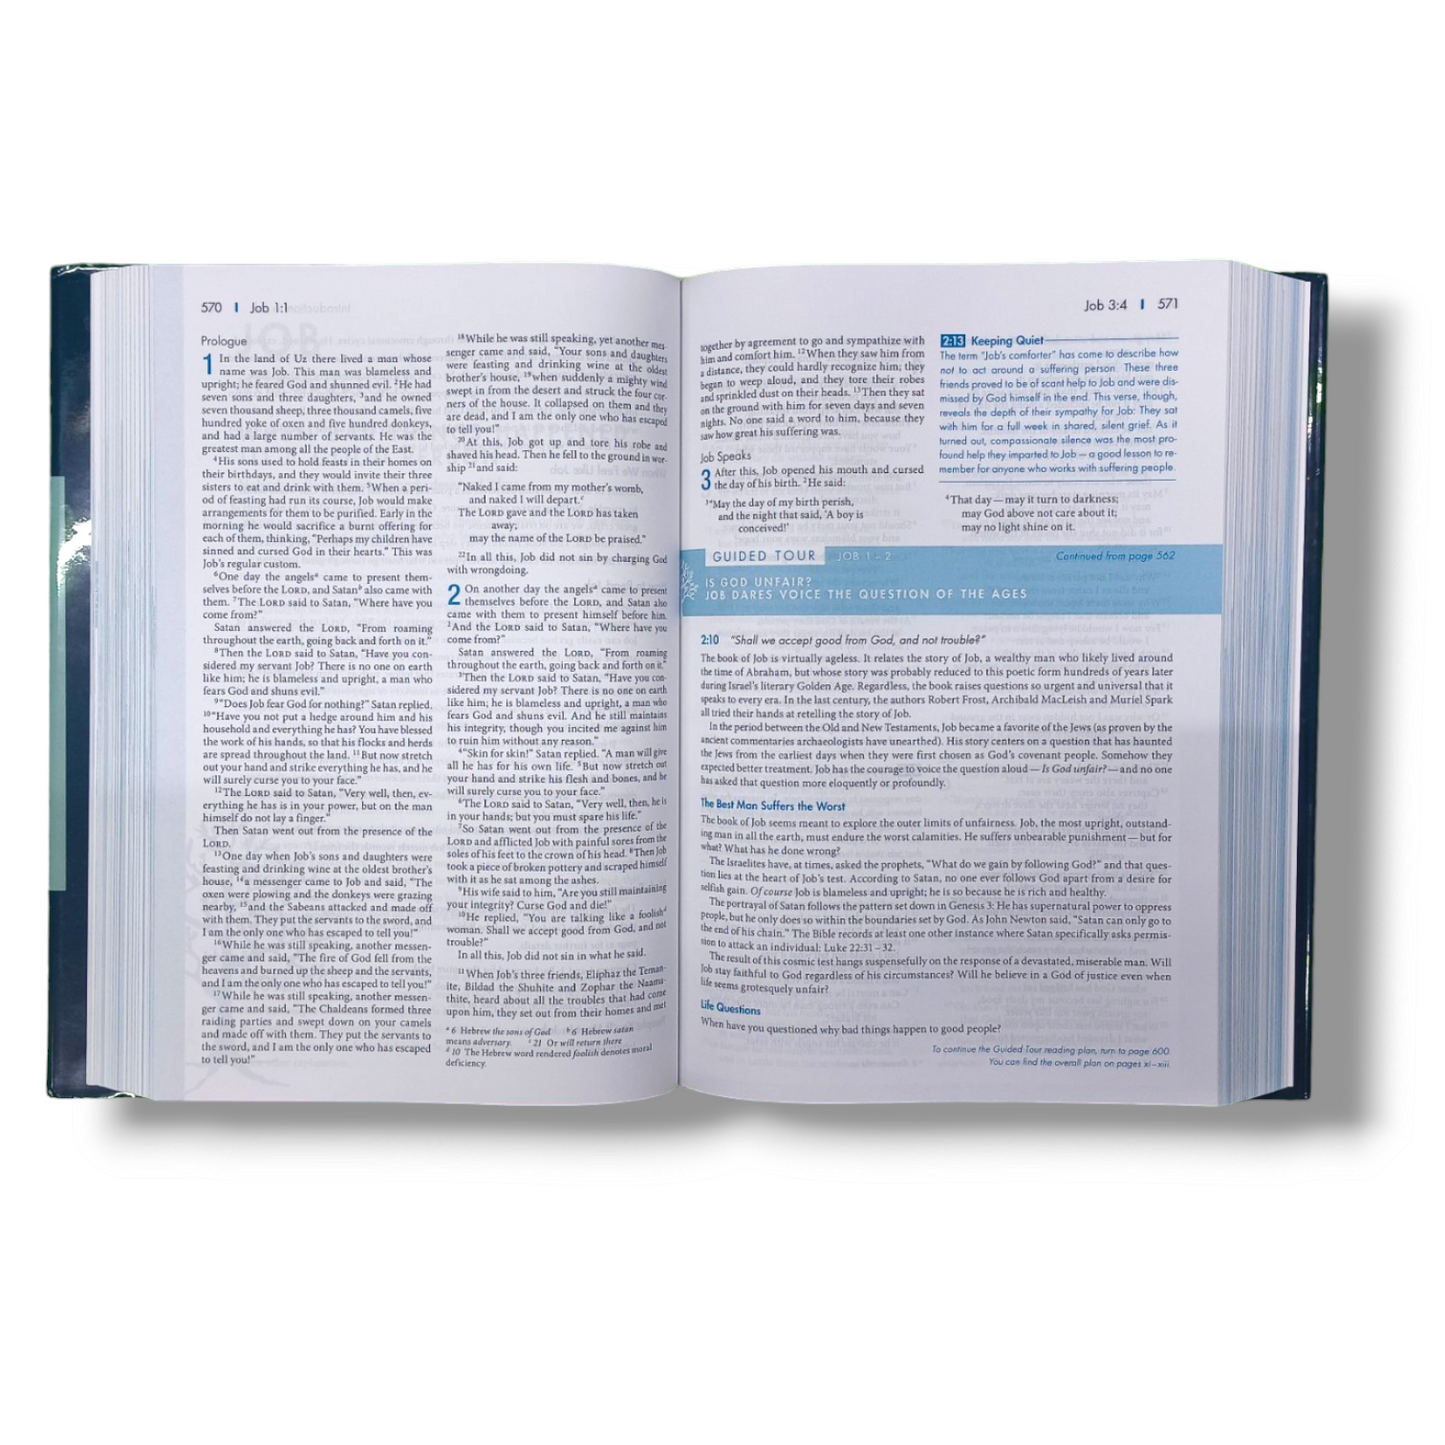 NIV Student Bible Compact | Hard Bound Edition | Study Bible | New Edition